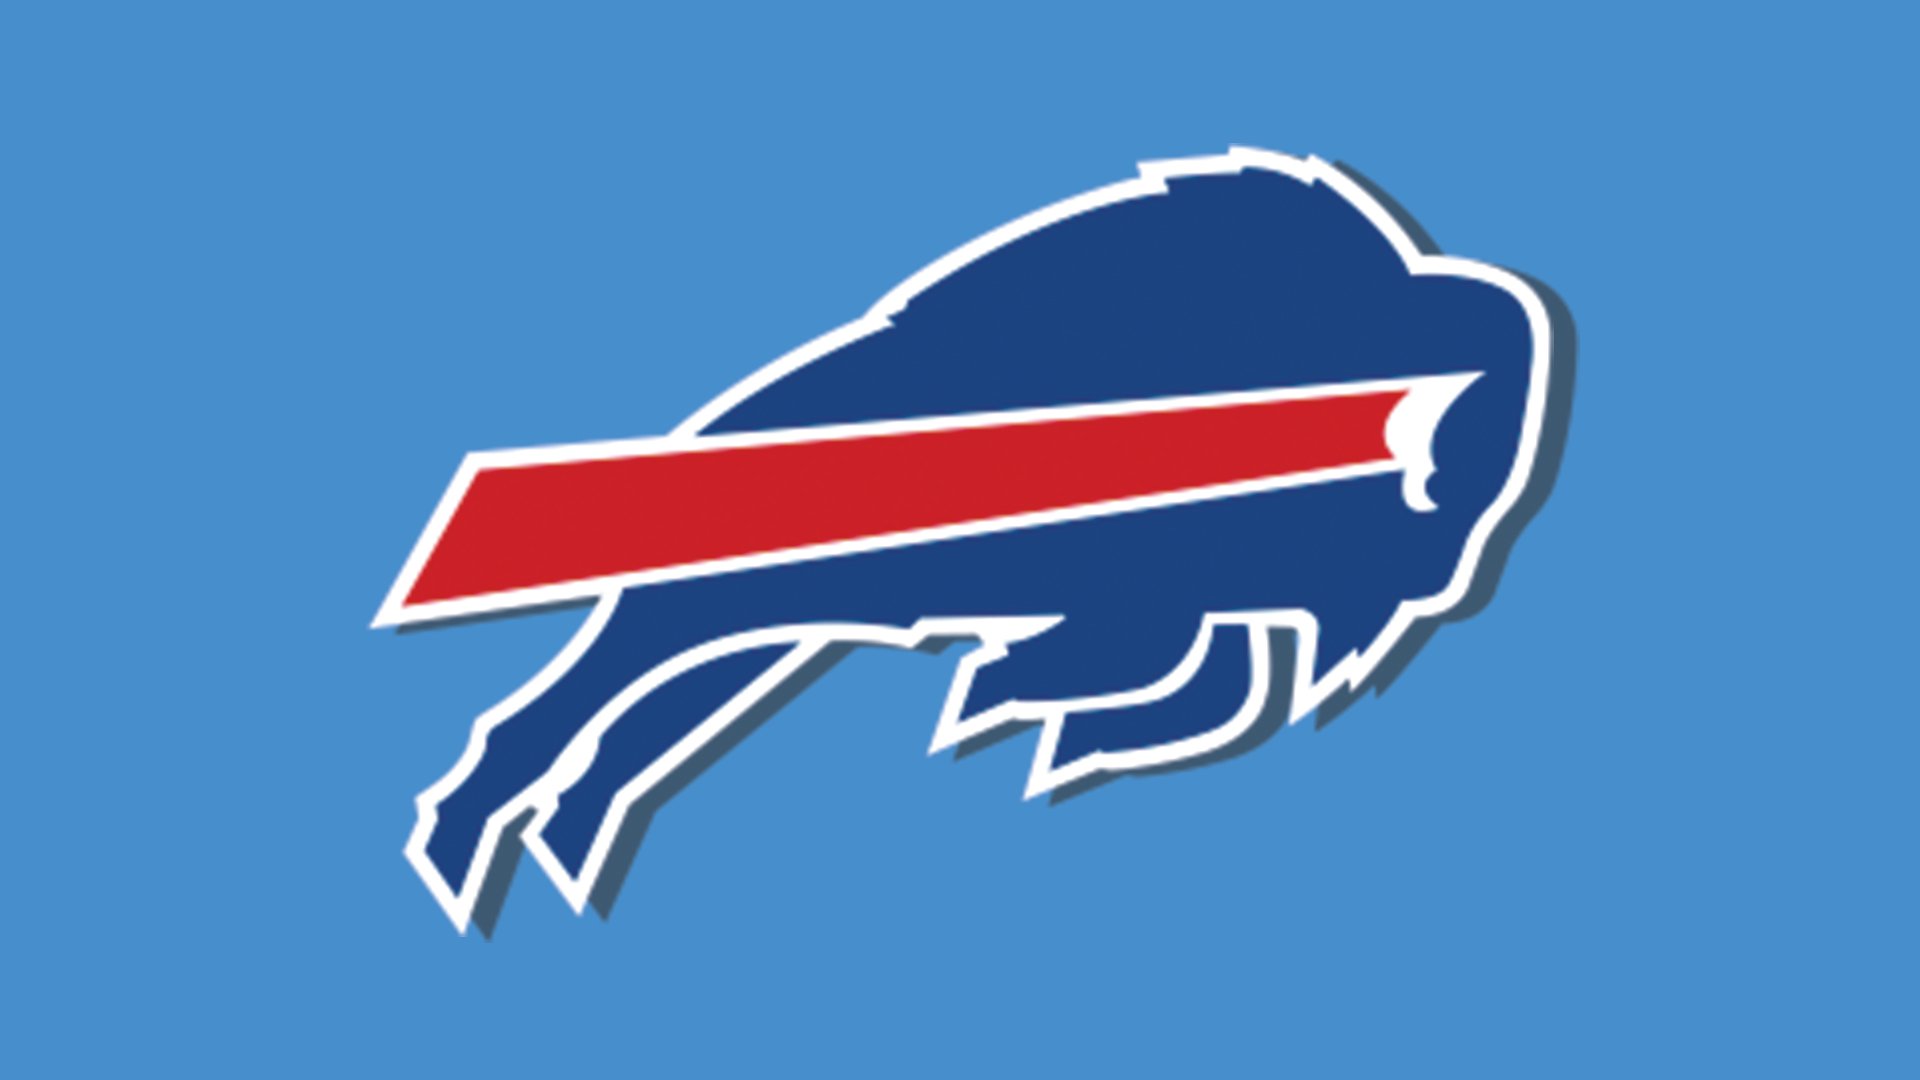 An American football logo